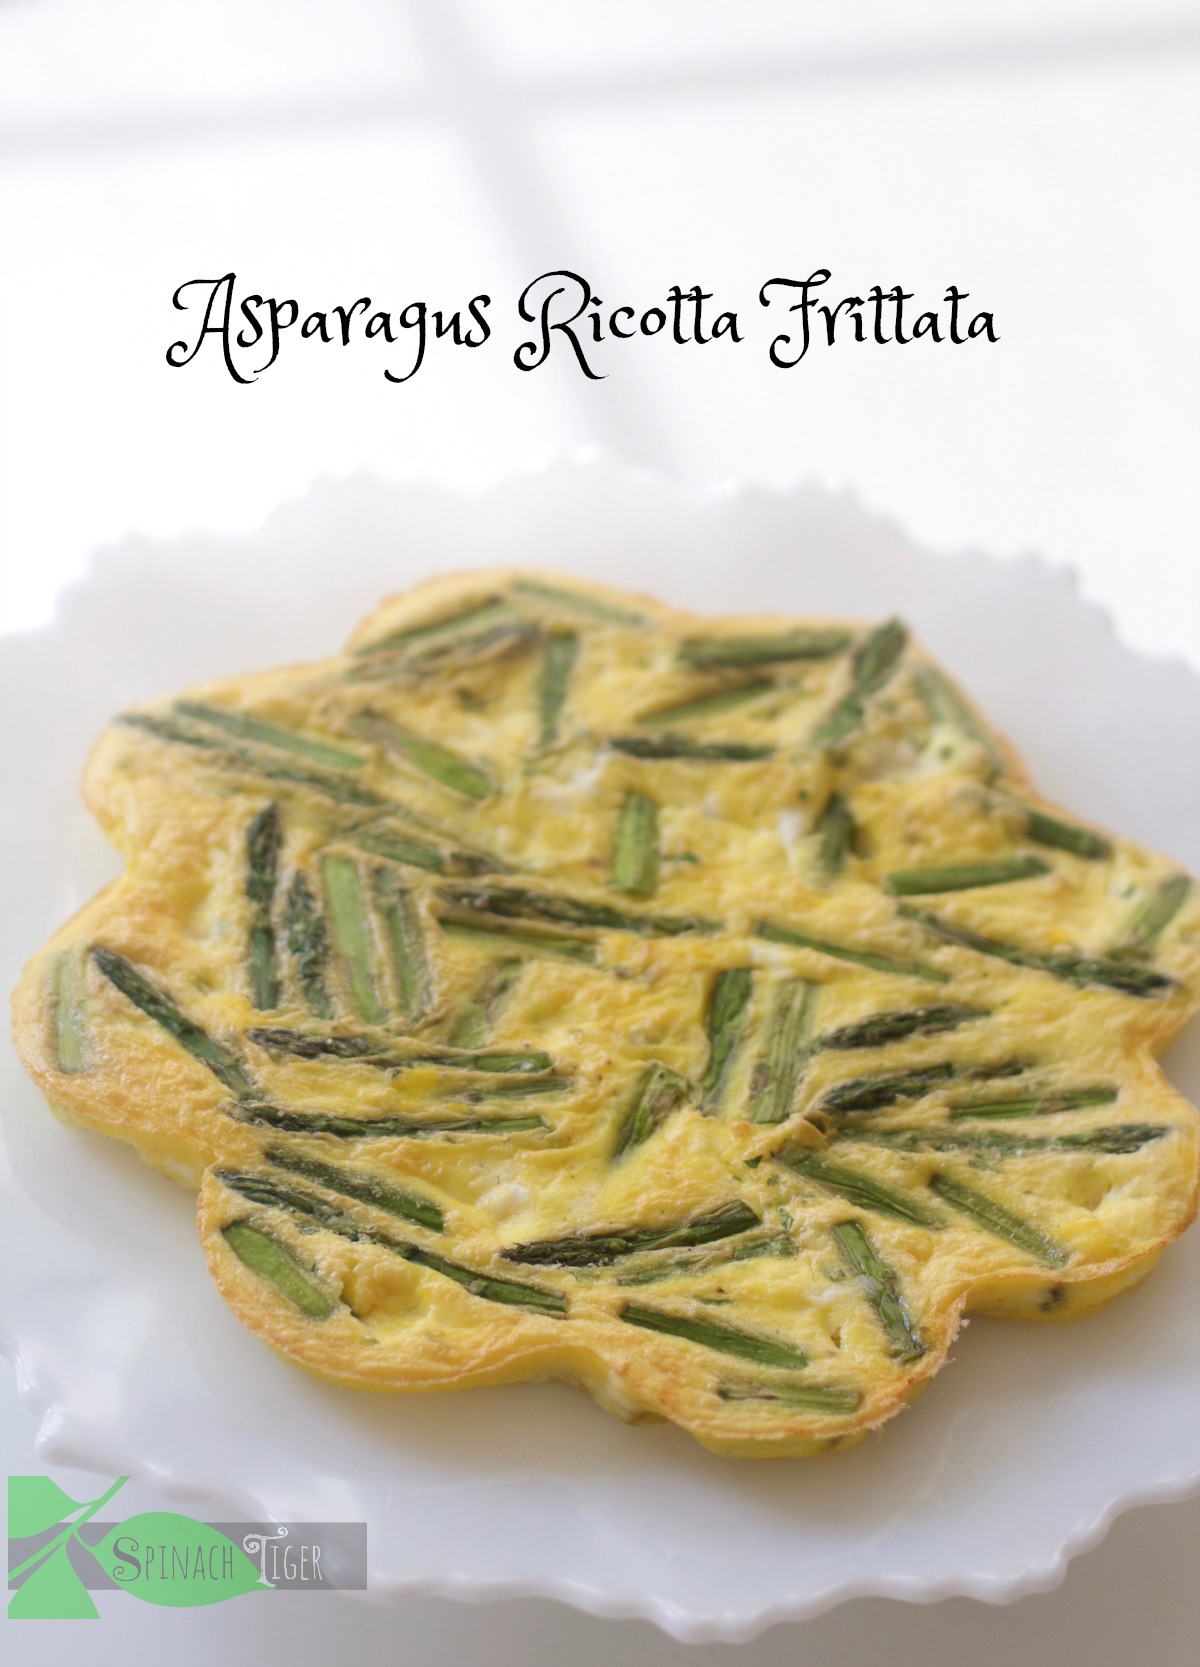 Asparagus Ricotta Frittata by Angela Roberts